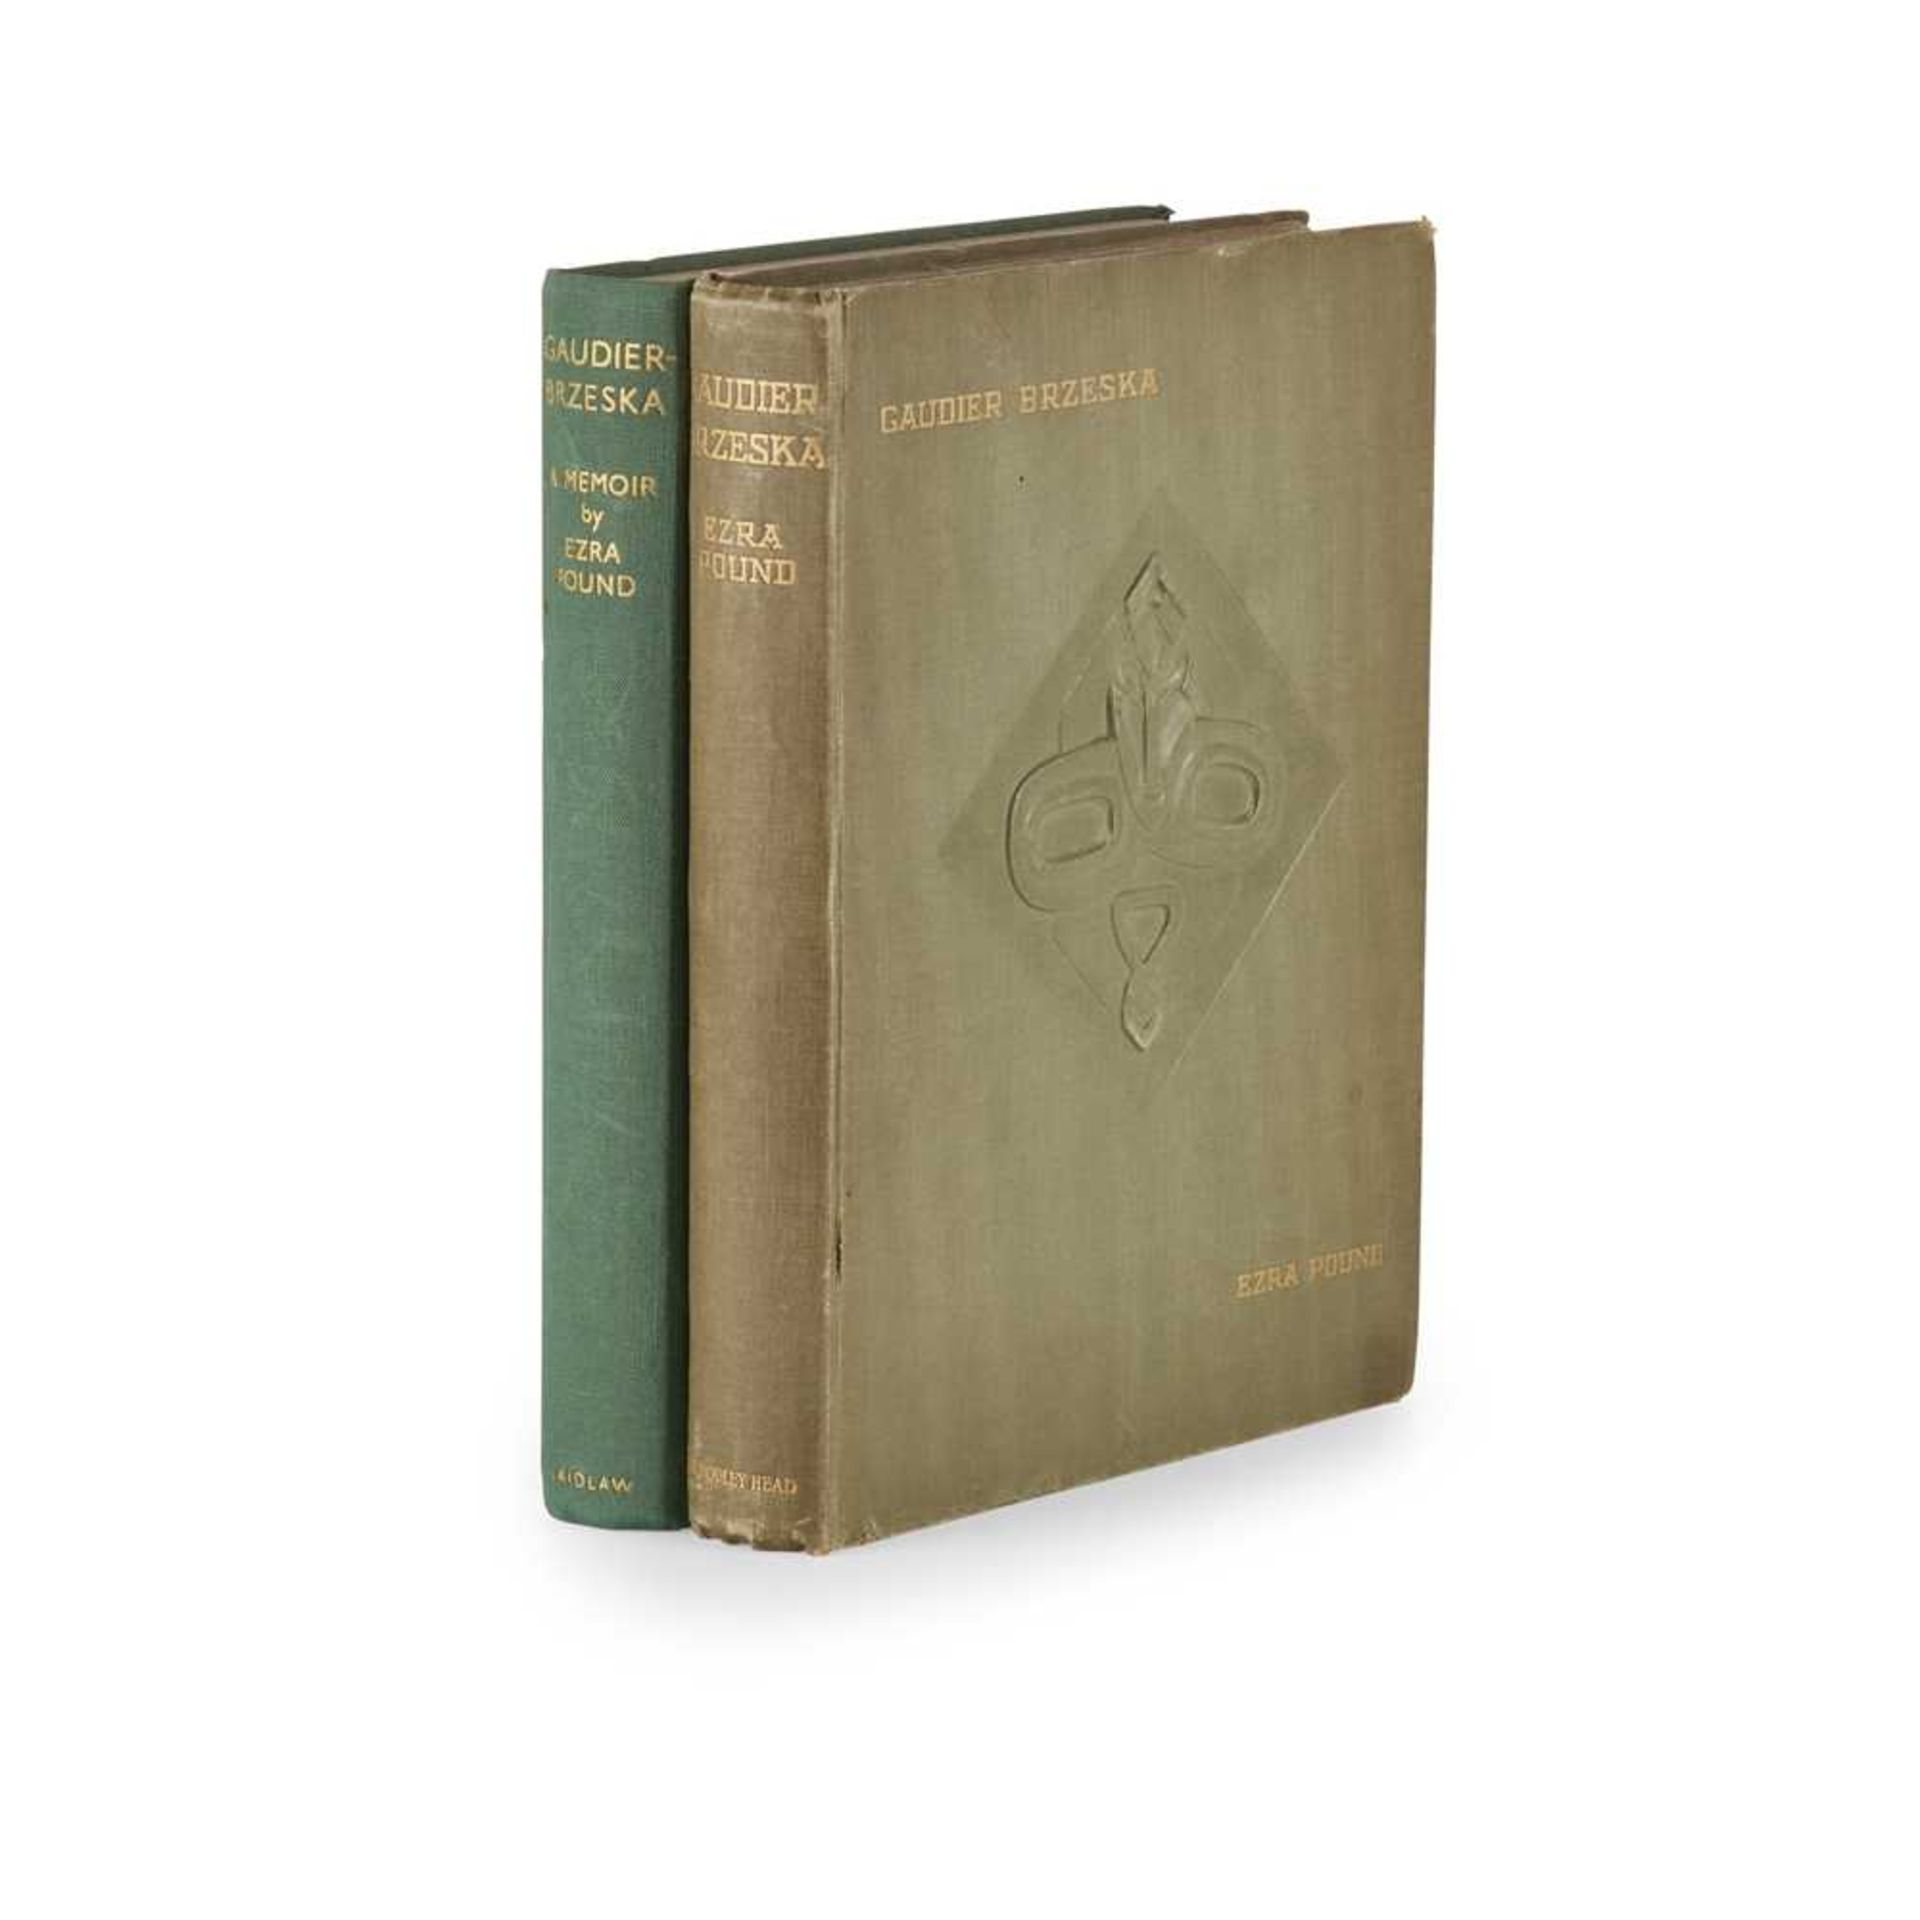 Pound, Ezra Gaudier-Brzeska London: John Lane, 1916. First edition, 4to, plates, original embossed